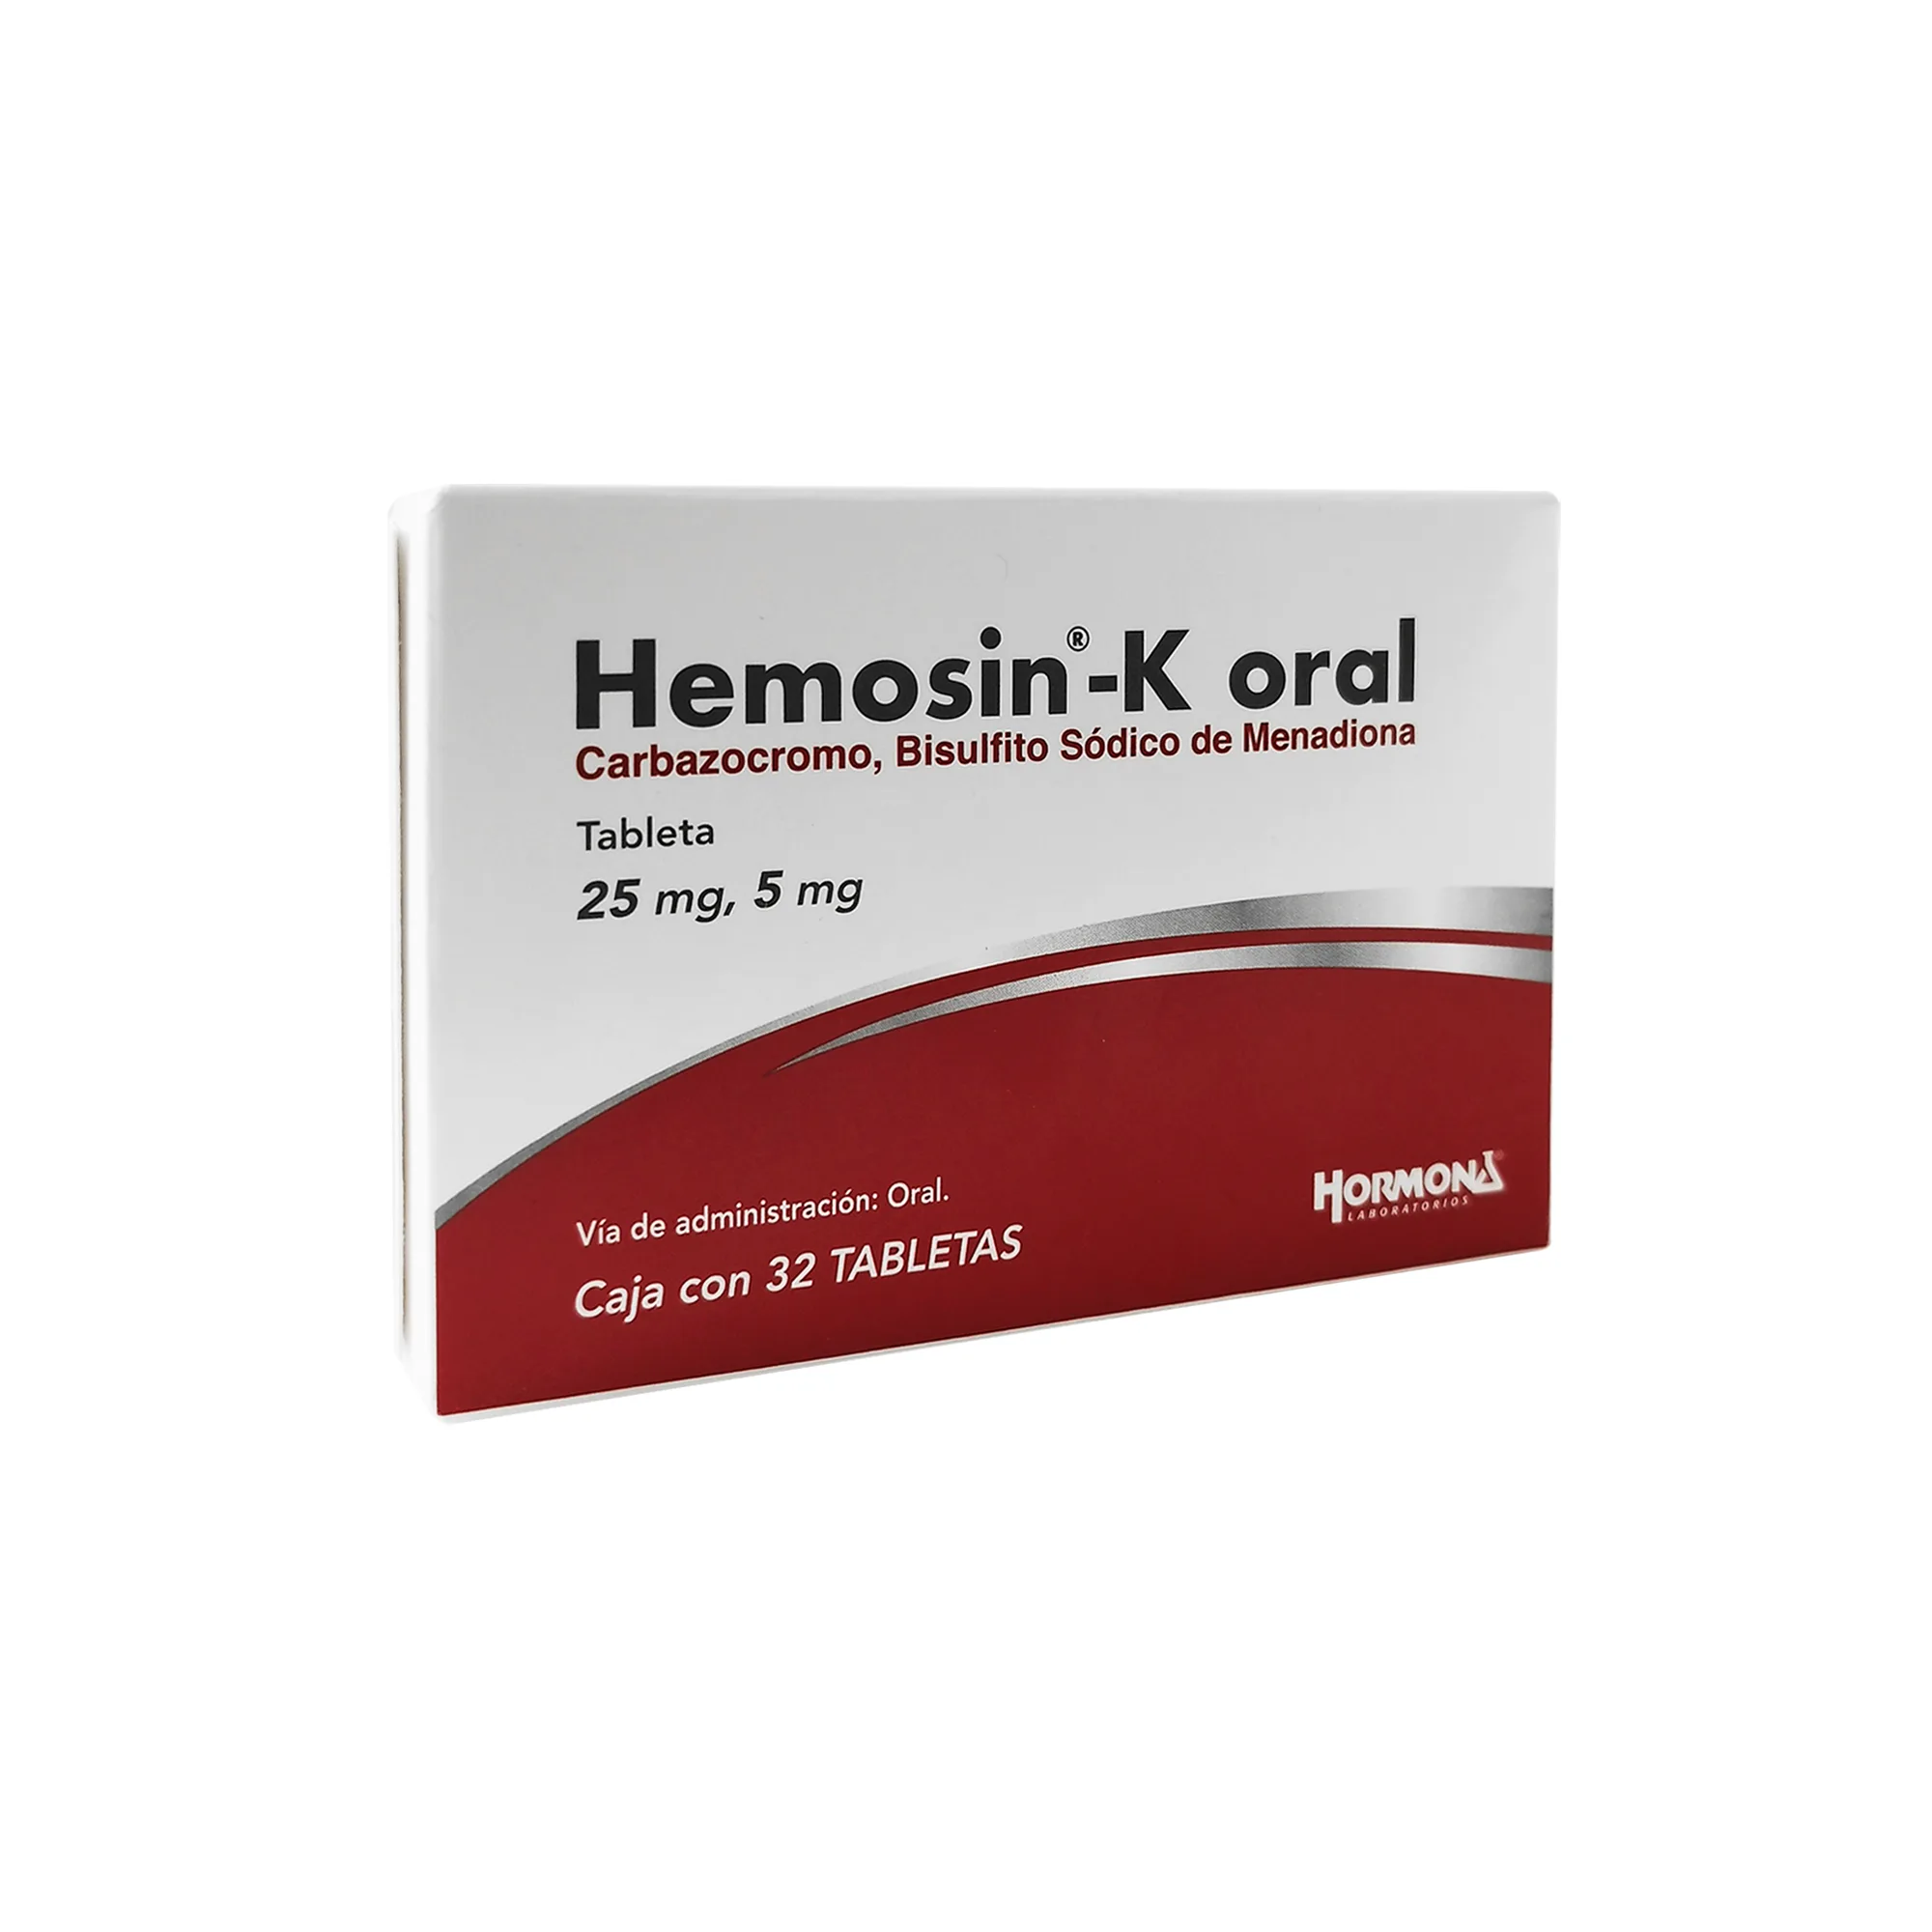 7501385420238 1 hemosin-k carbazocromo - bisulfito sodico de menadiona 25/5 mg tableta 32 tableta(s)